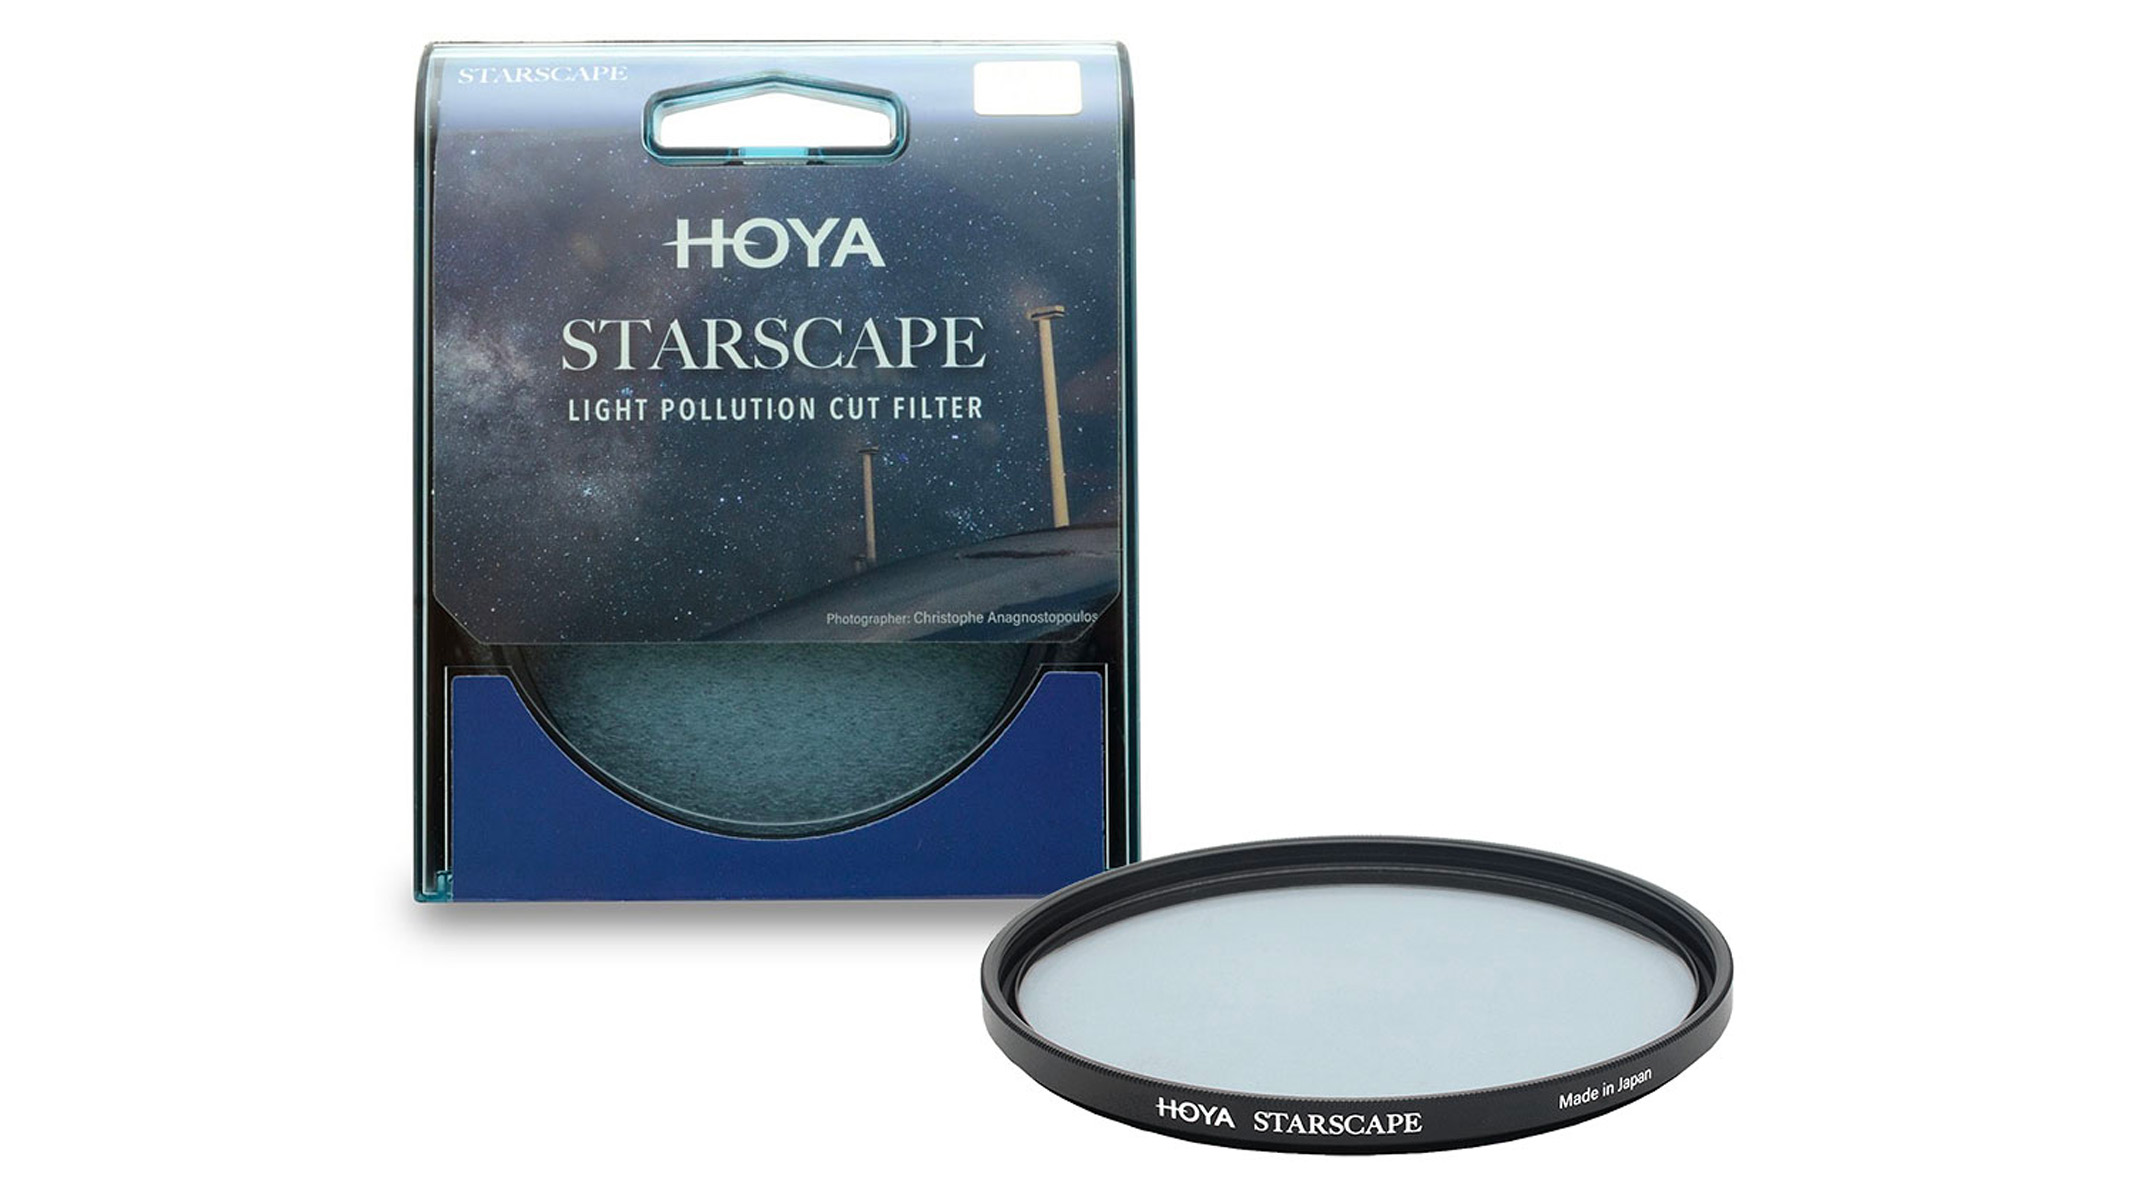 Hoya starscape light pollution filter on a white background